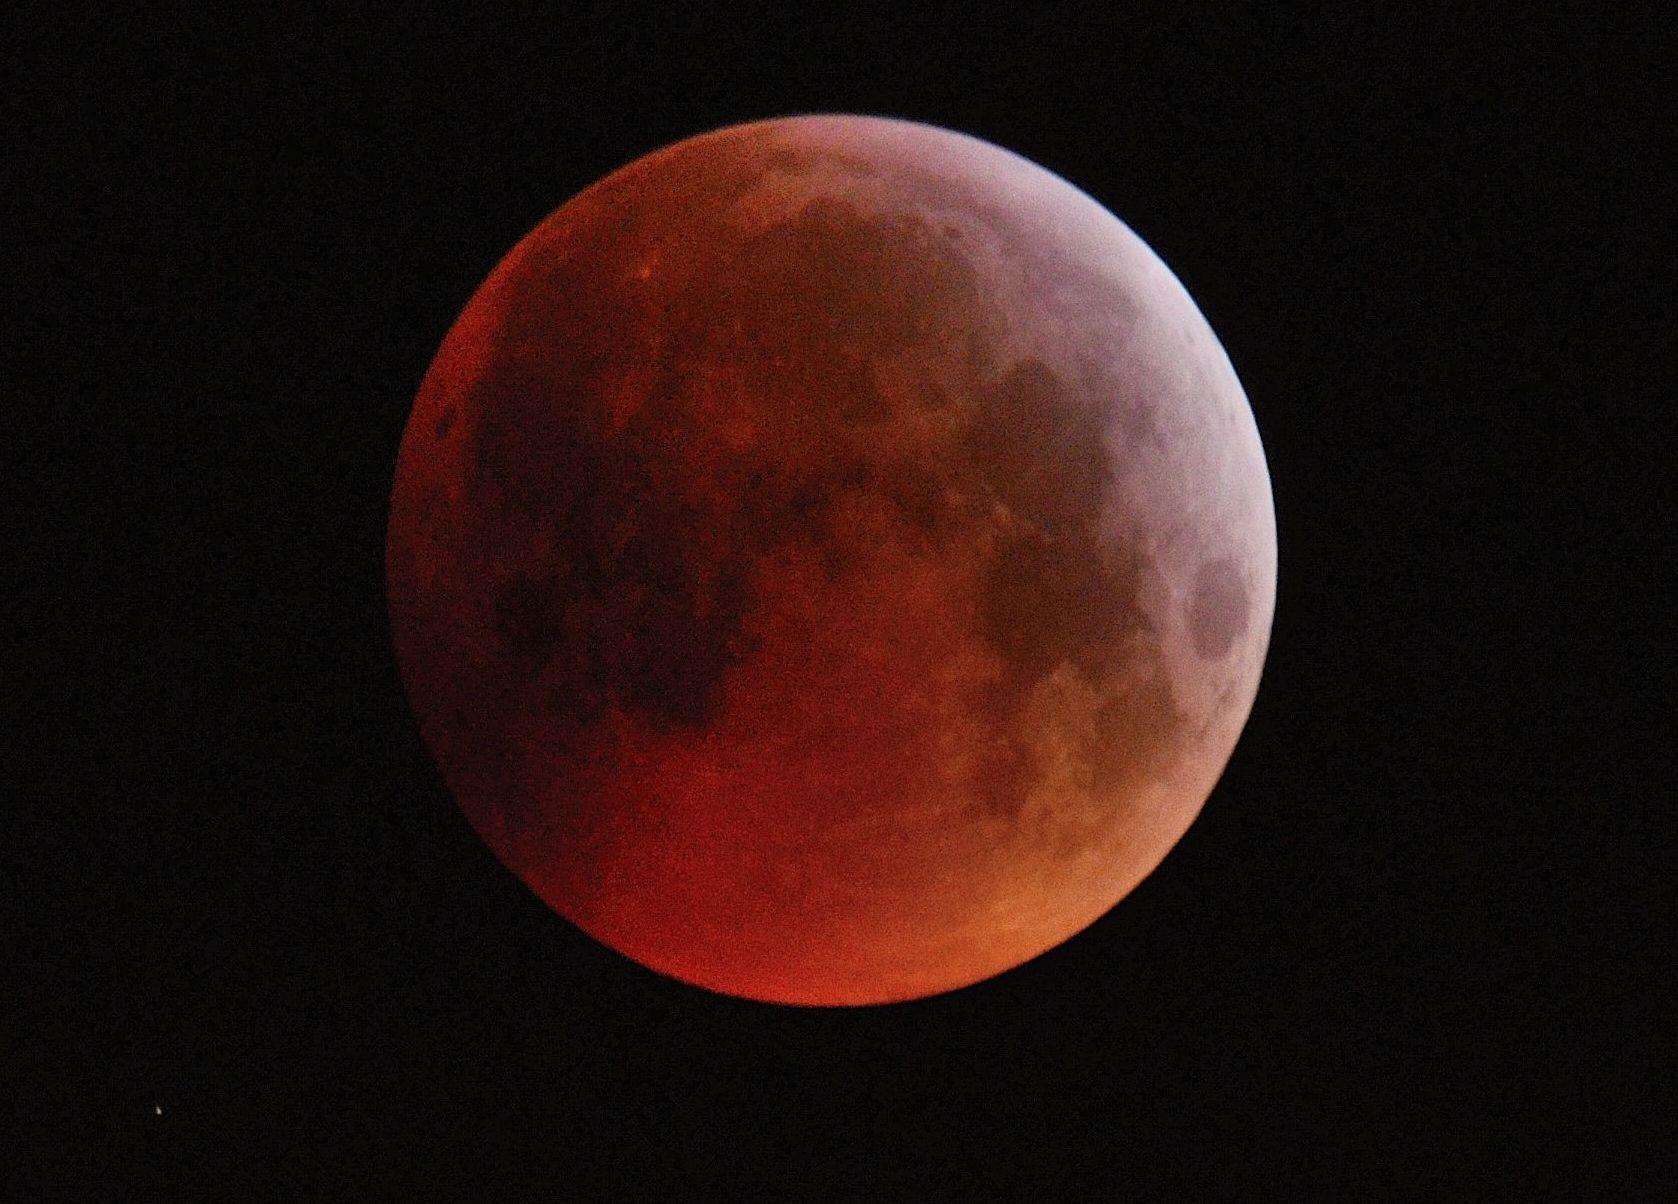 Jason Arthur from Gravesend shared this lunar eclipse snap